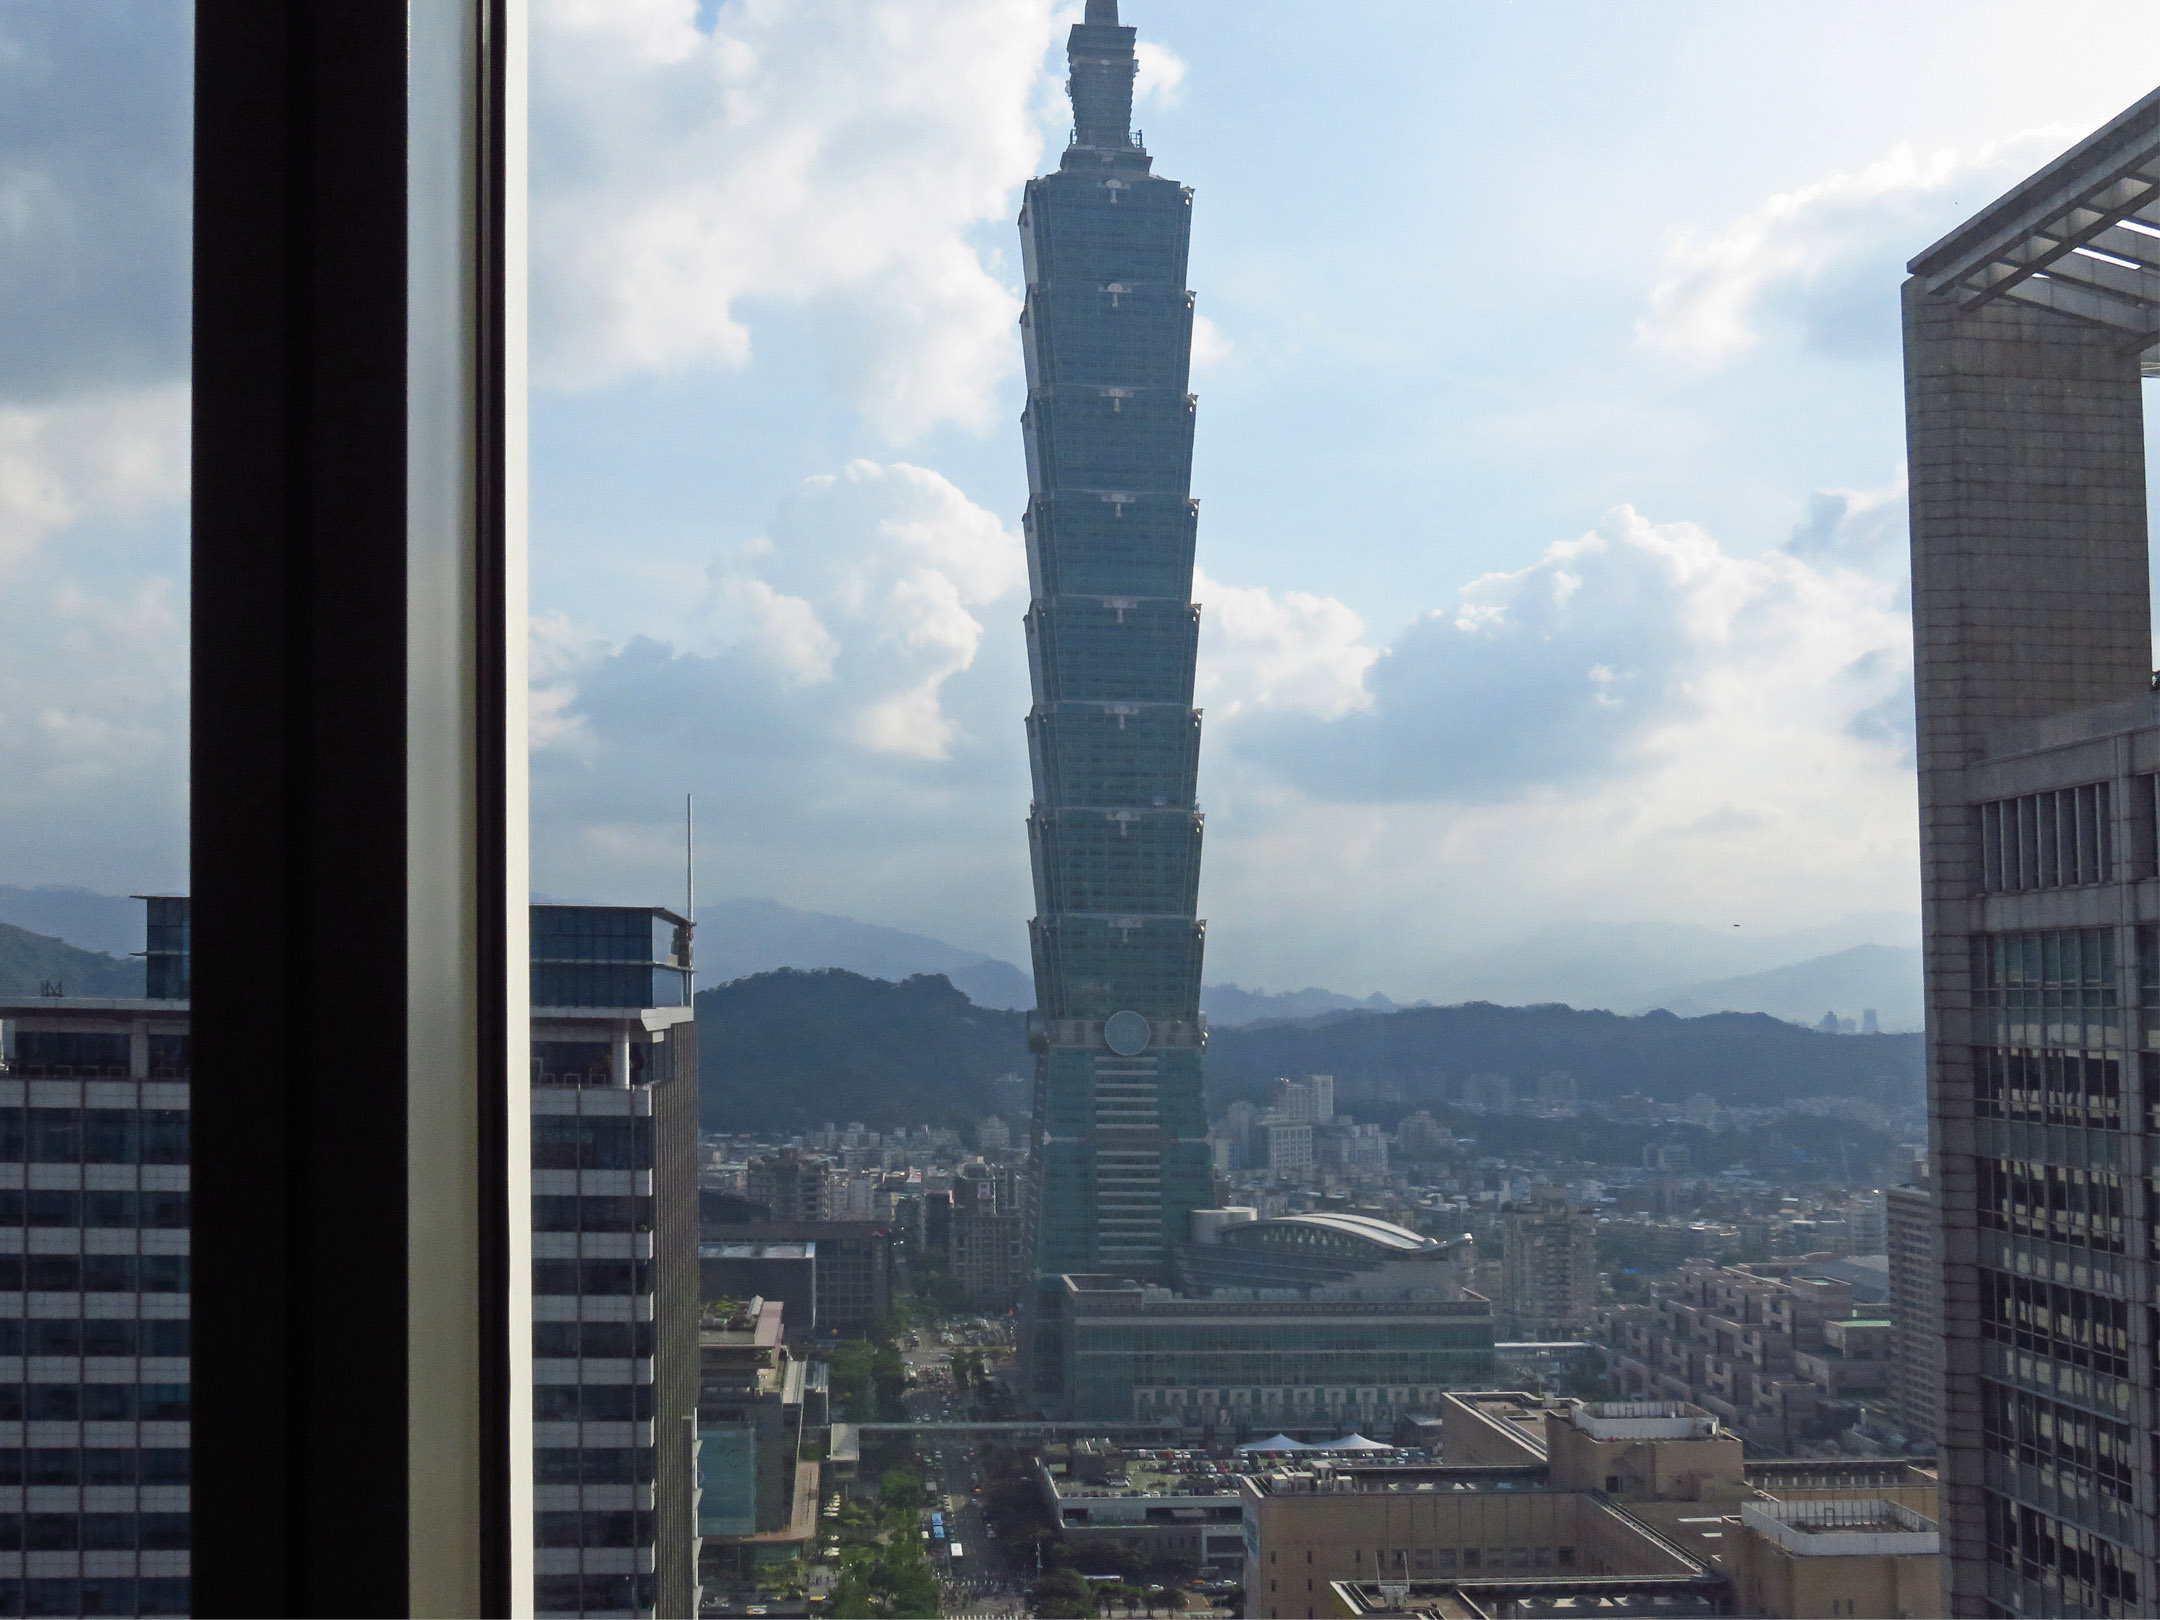 3. A view of Taipei 101